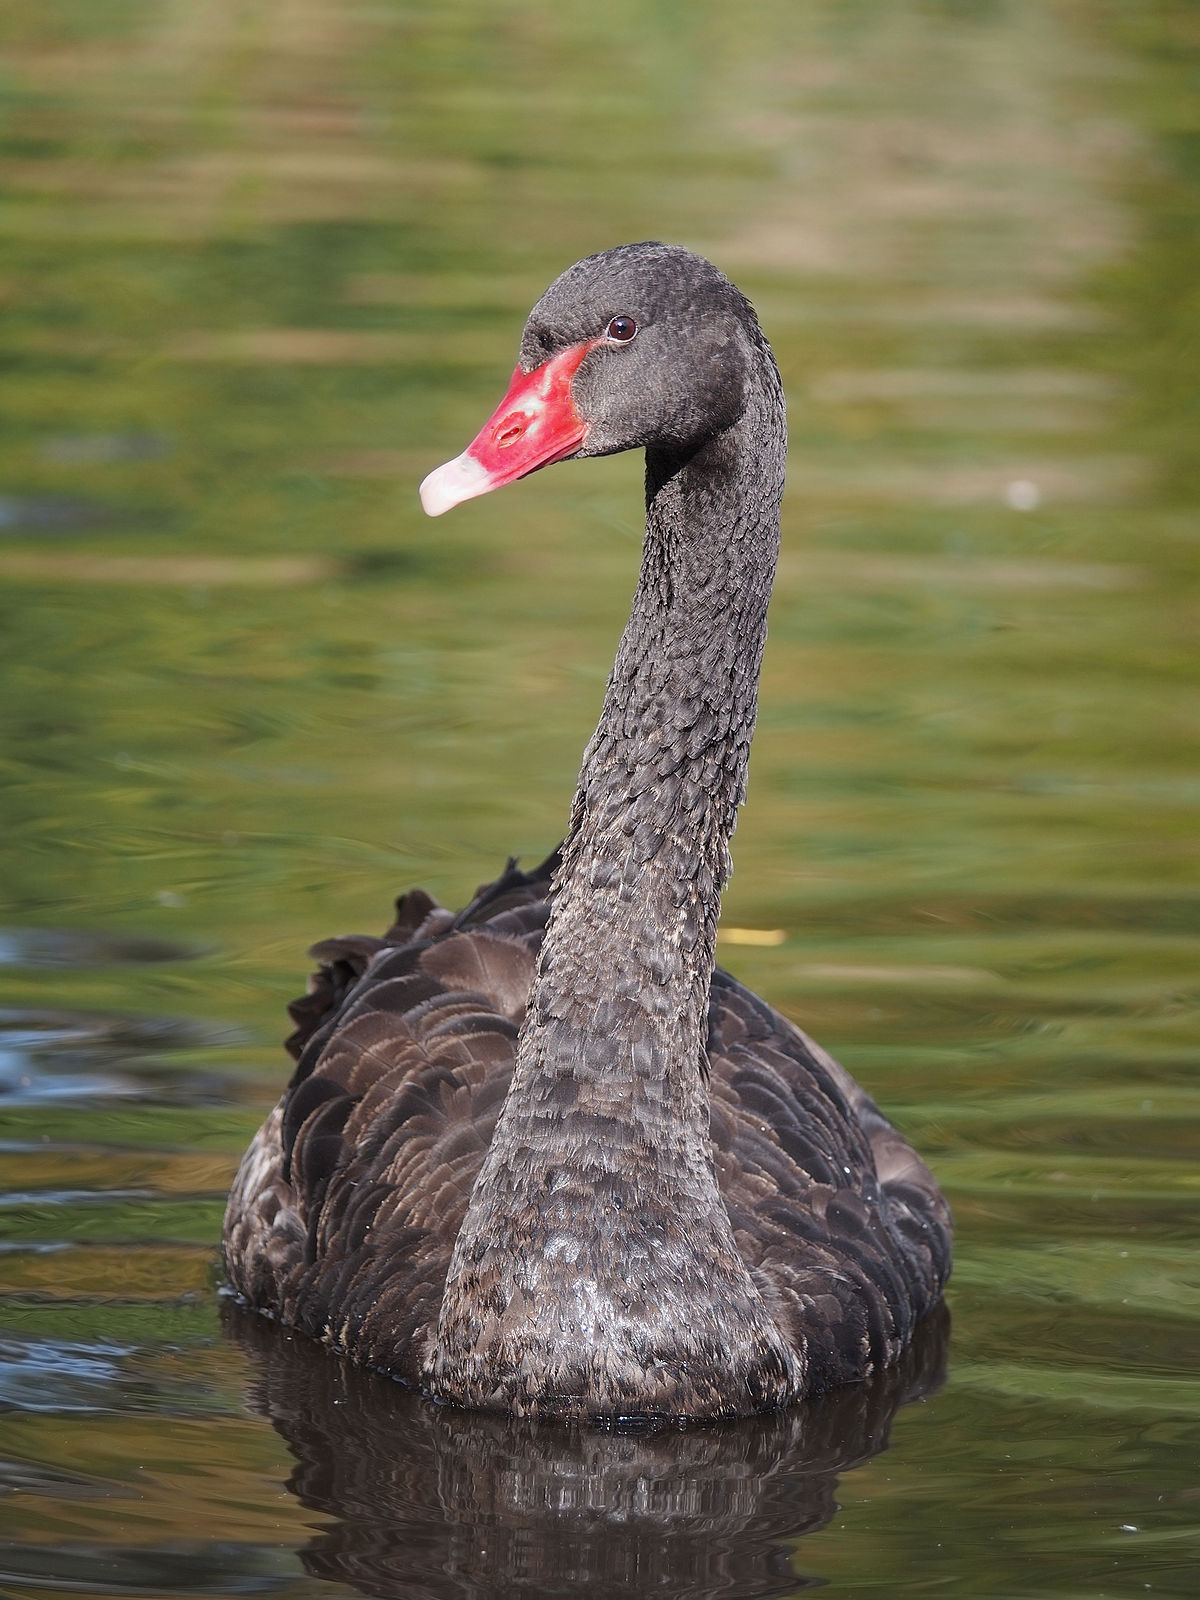 Black swan - Wikipedia